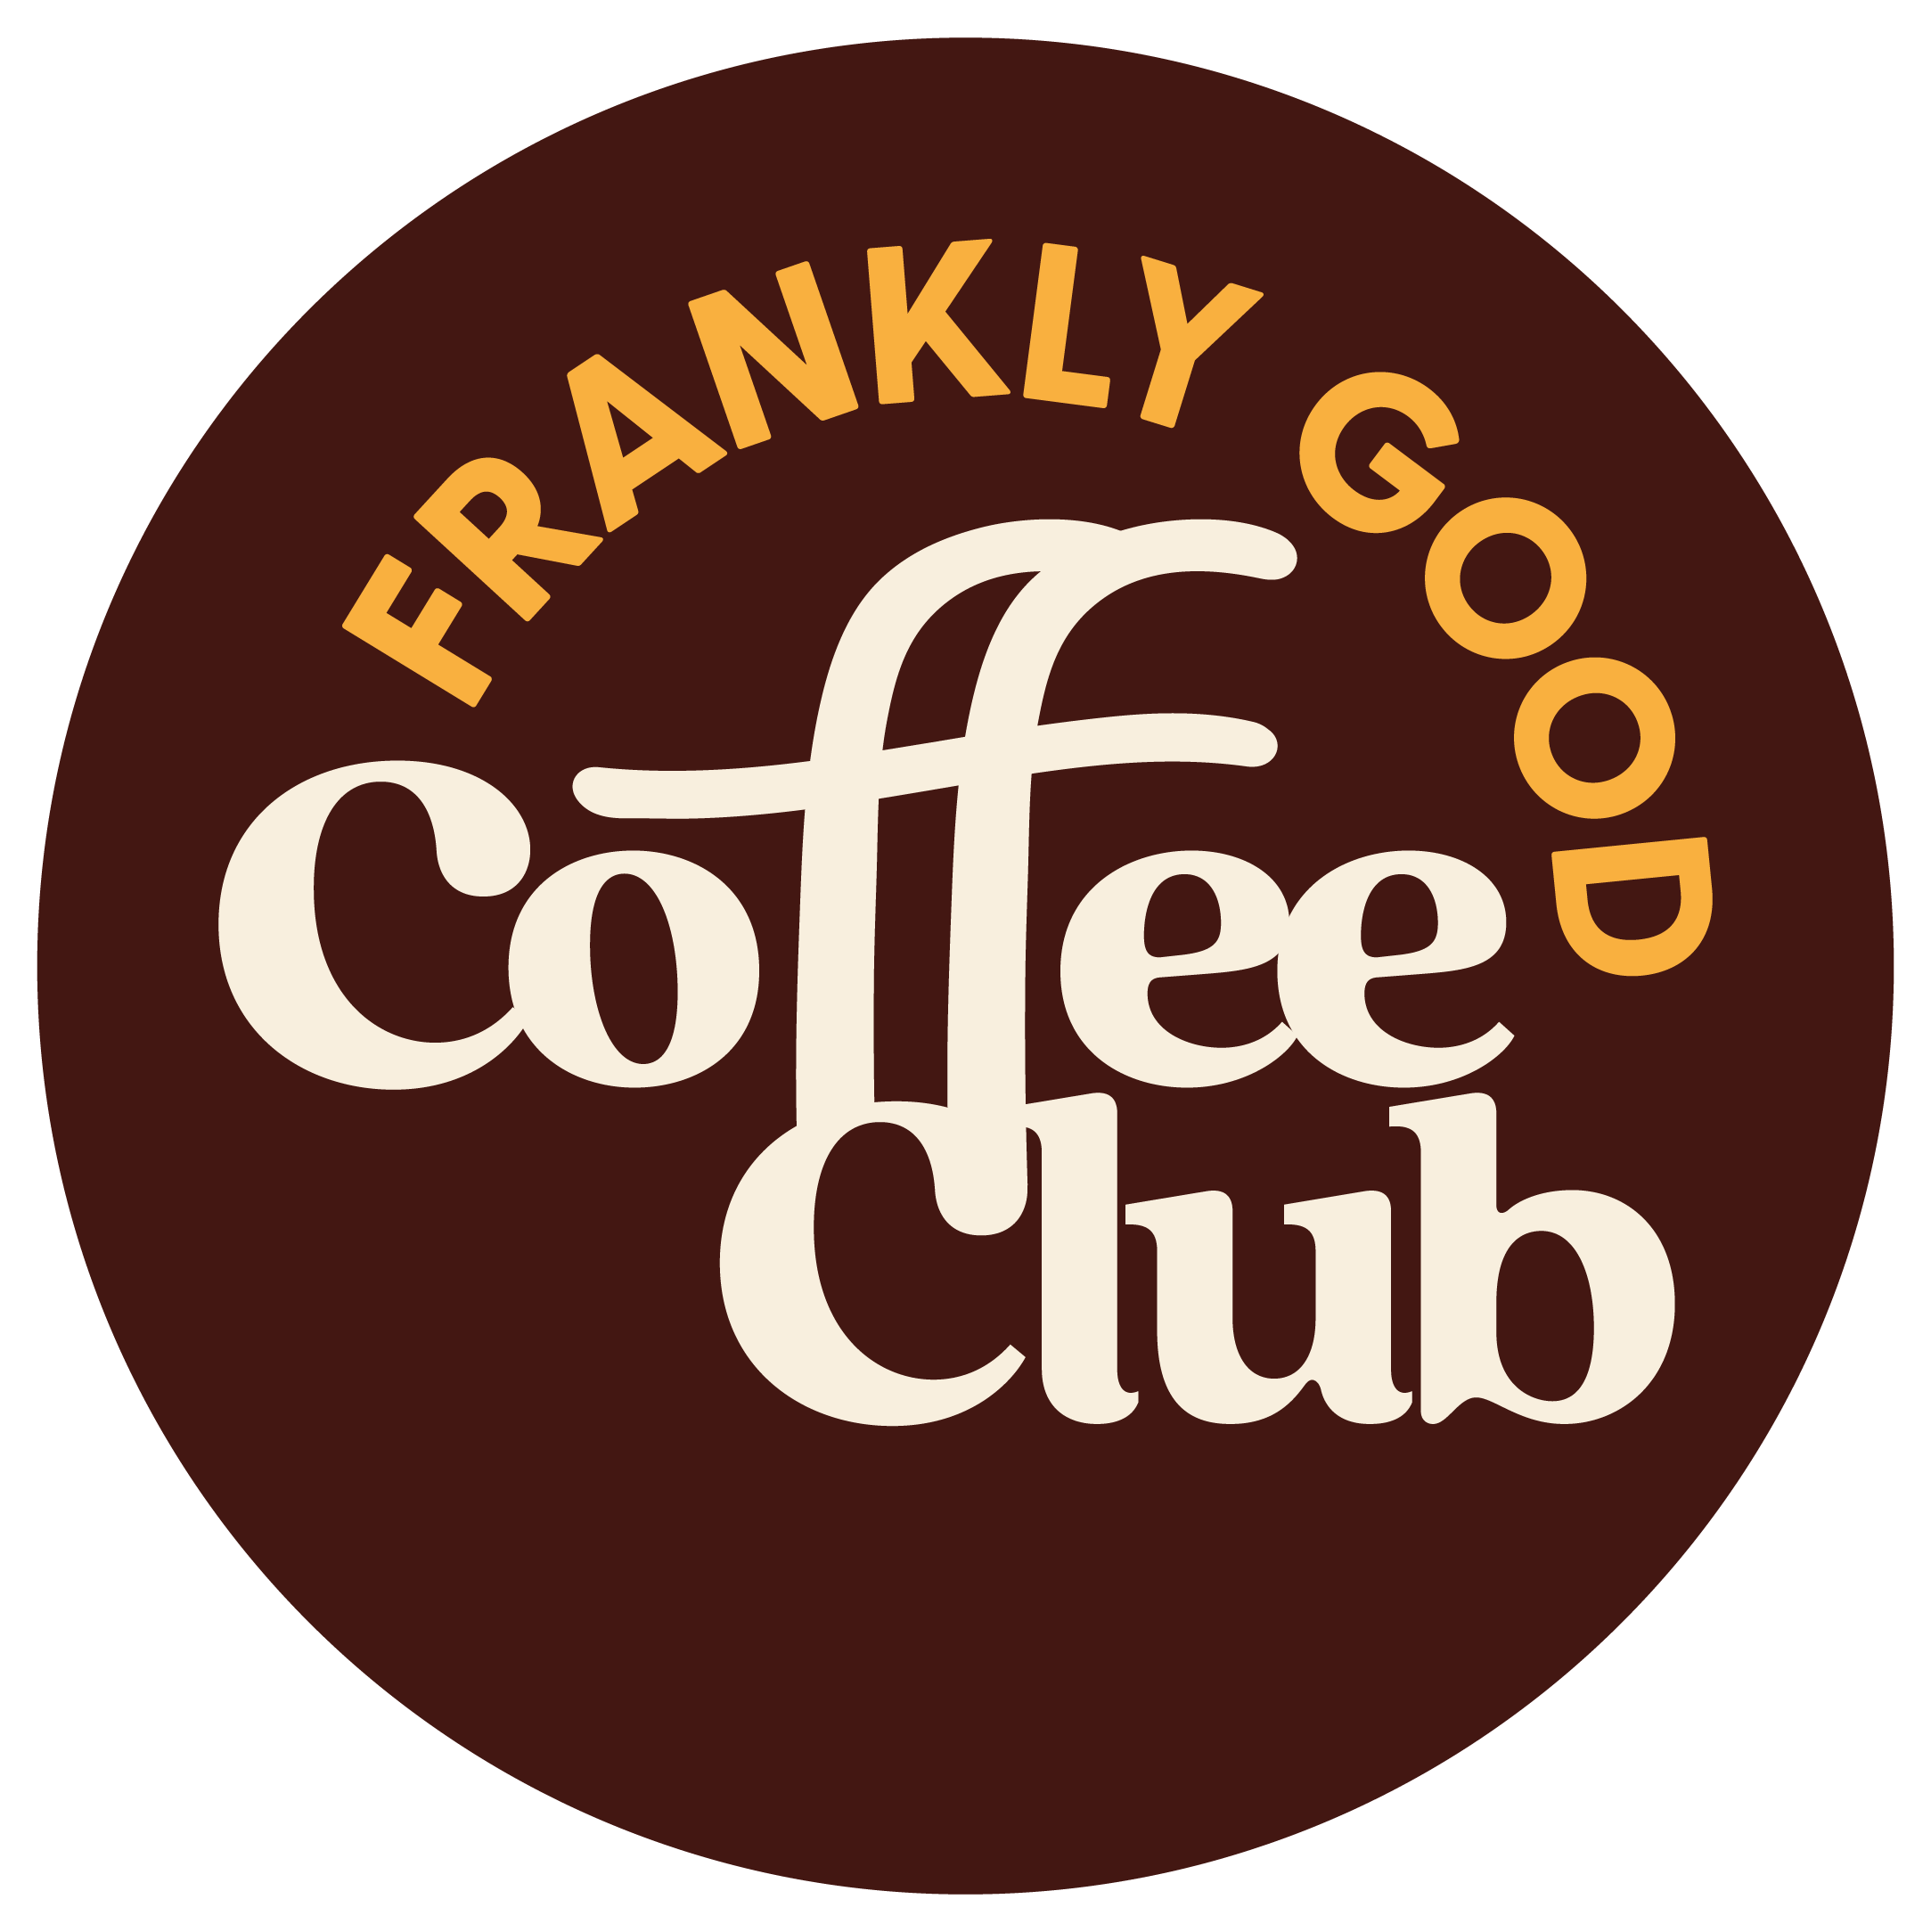 frankly-good-coffee-rgb-coffee-club-logo-badgehigh-res.png